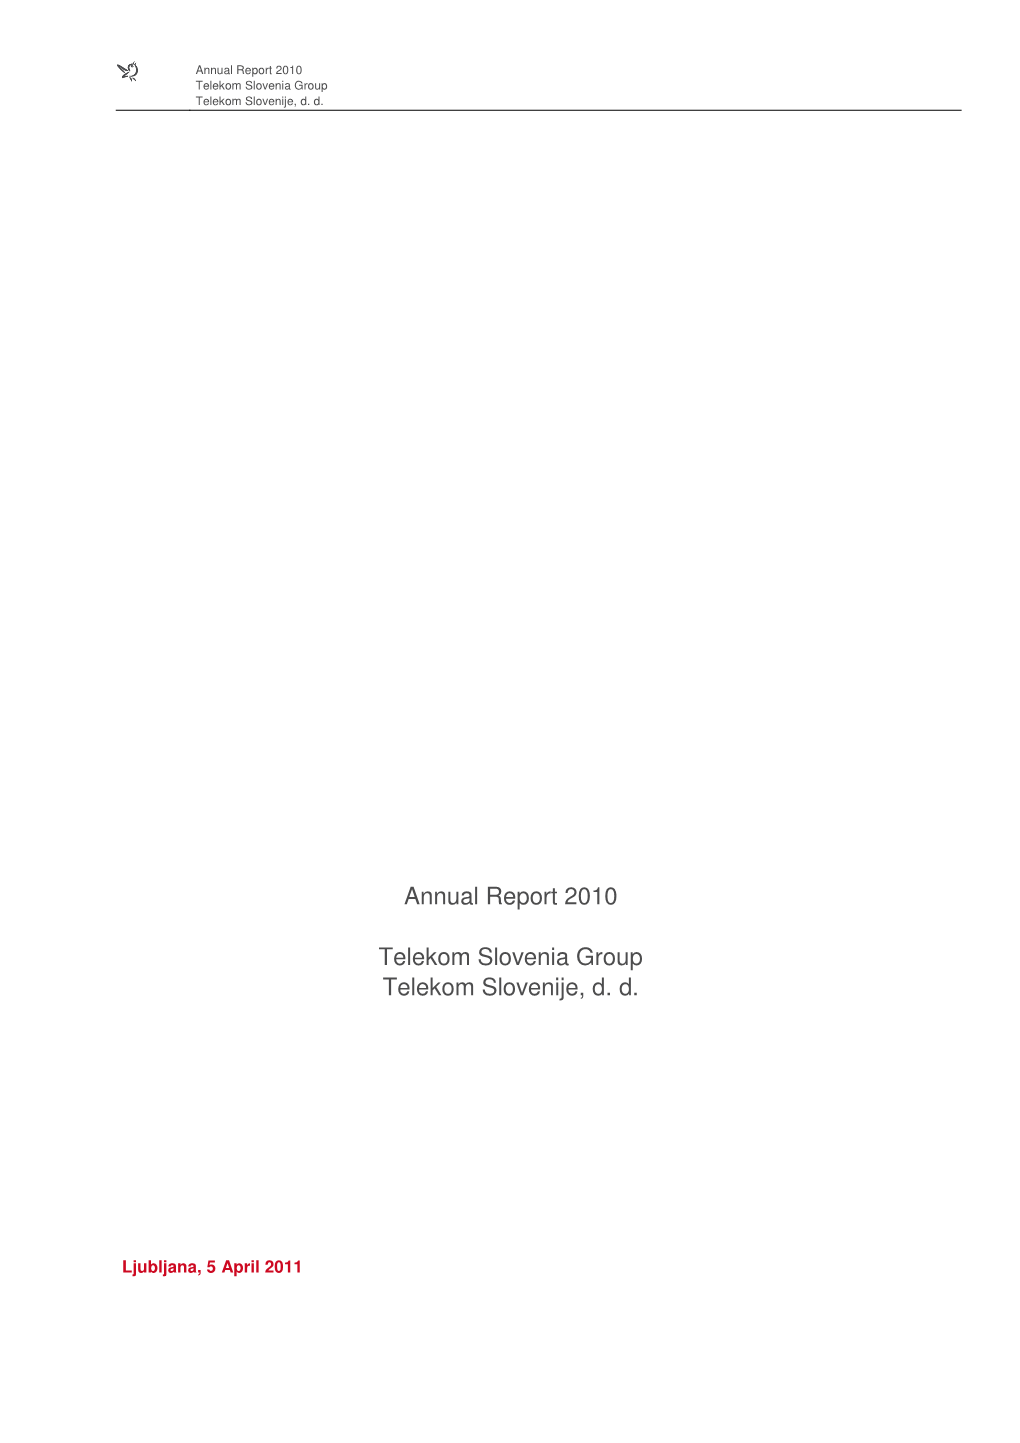 Annual Report 2010 Telekom Slovenia Group Telekom Slovenije, D